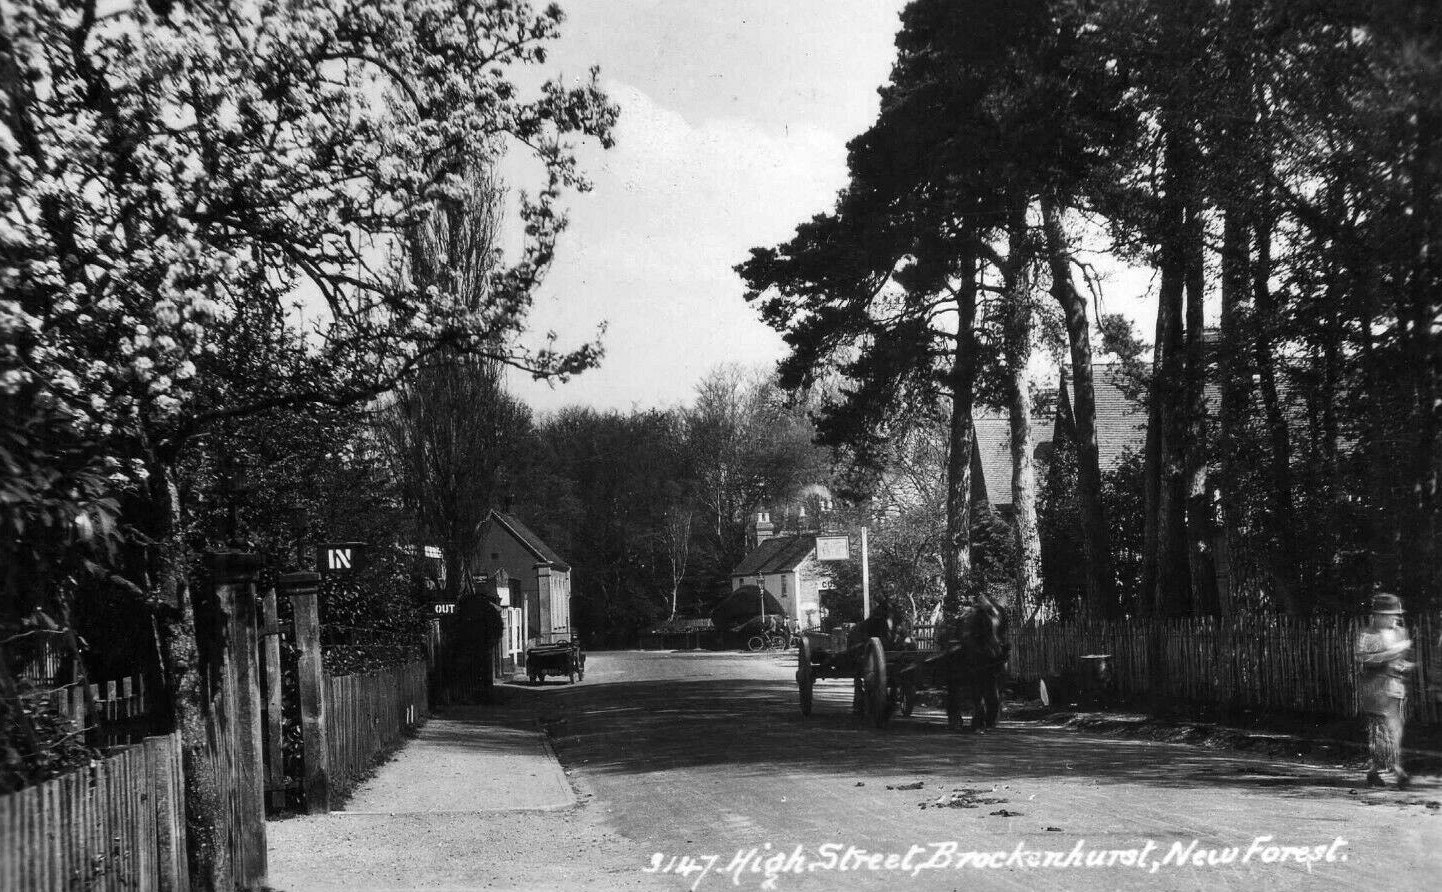 Brockenhurst picture from old postcard